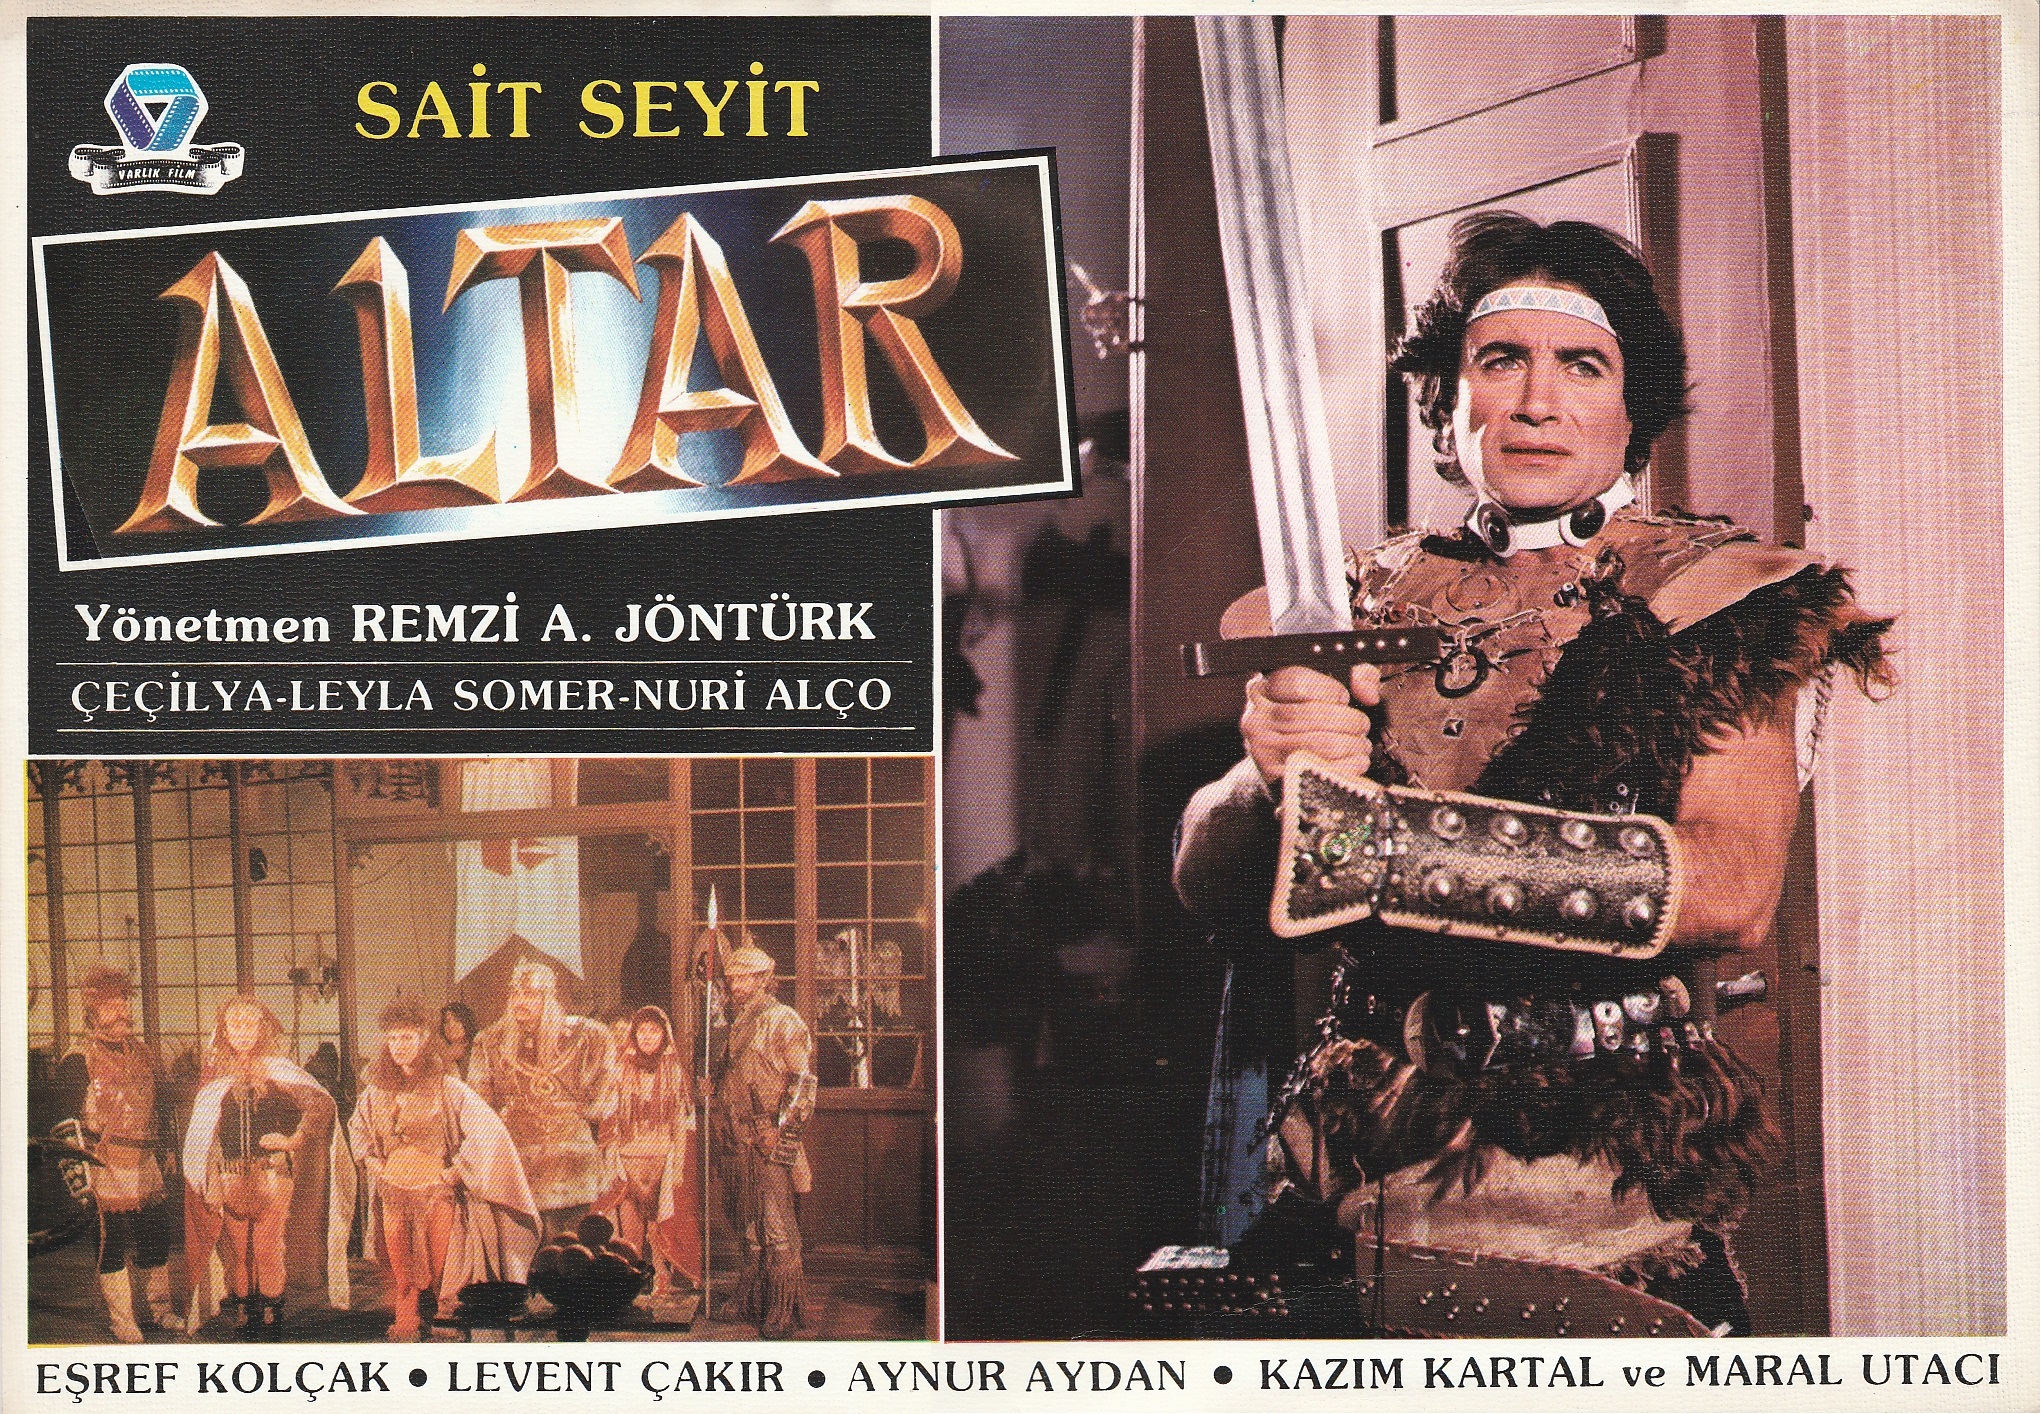 Altar (1985) Screenshot 1 